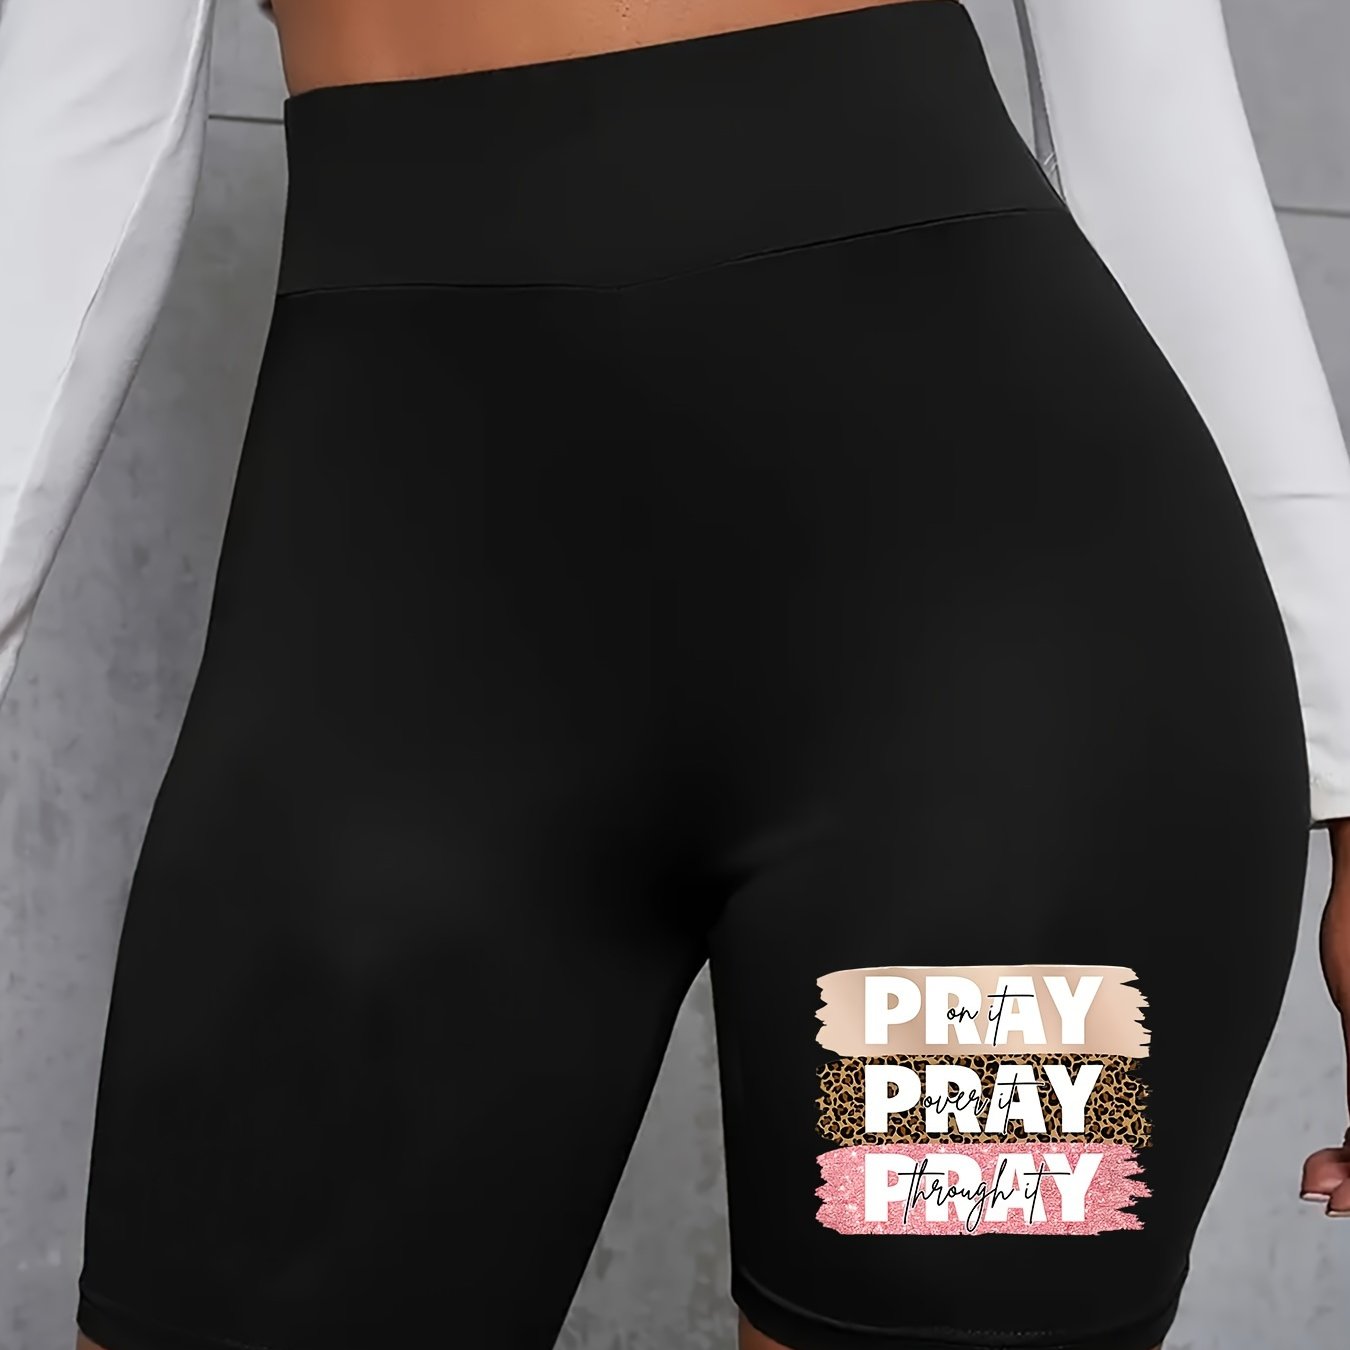 Pray On It, Over It, Through It High Waist Women's Christian Shorts claimedbygoddesigns